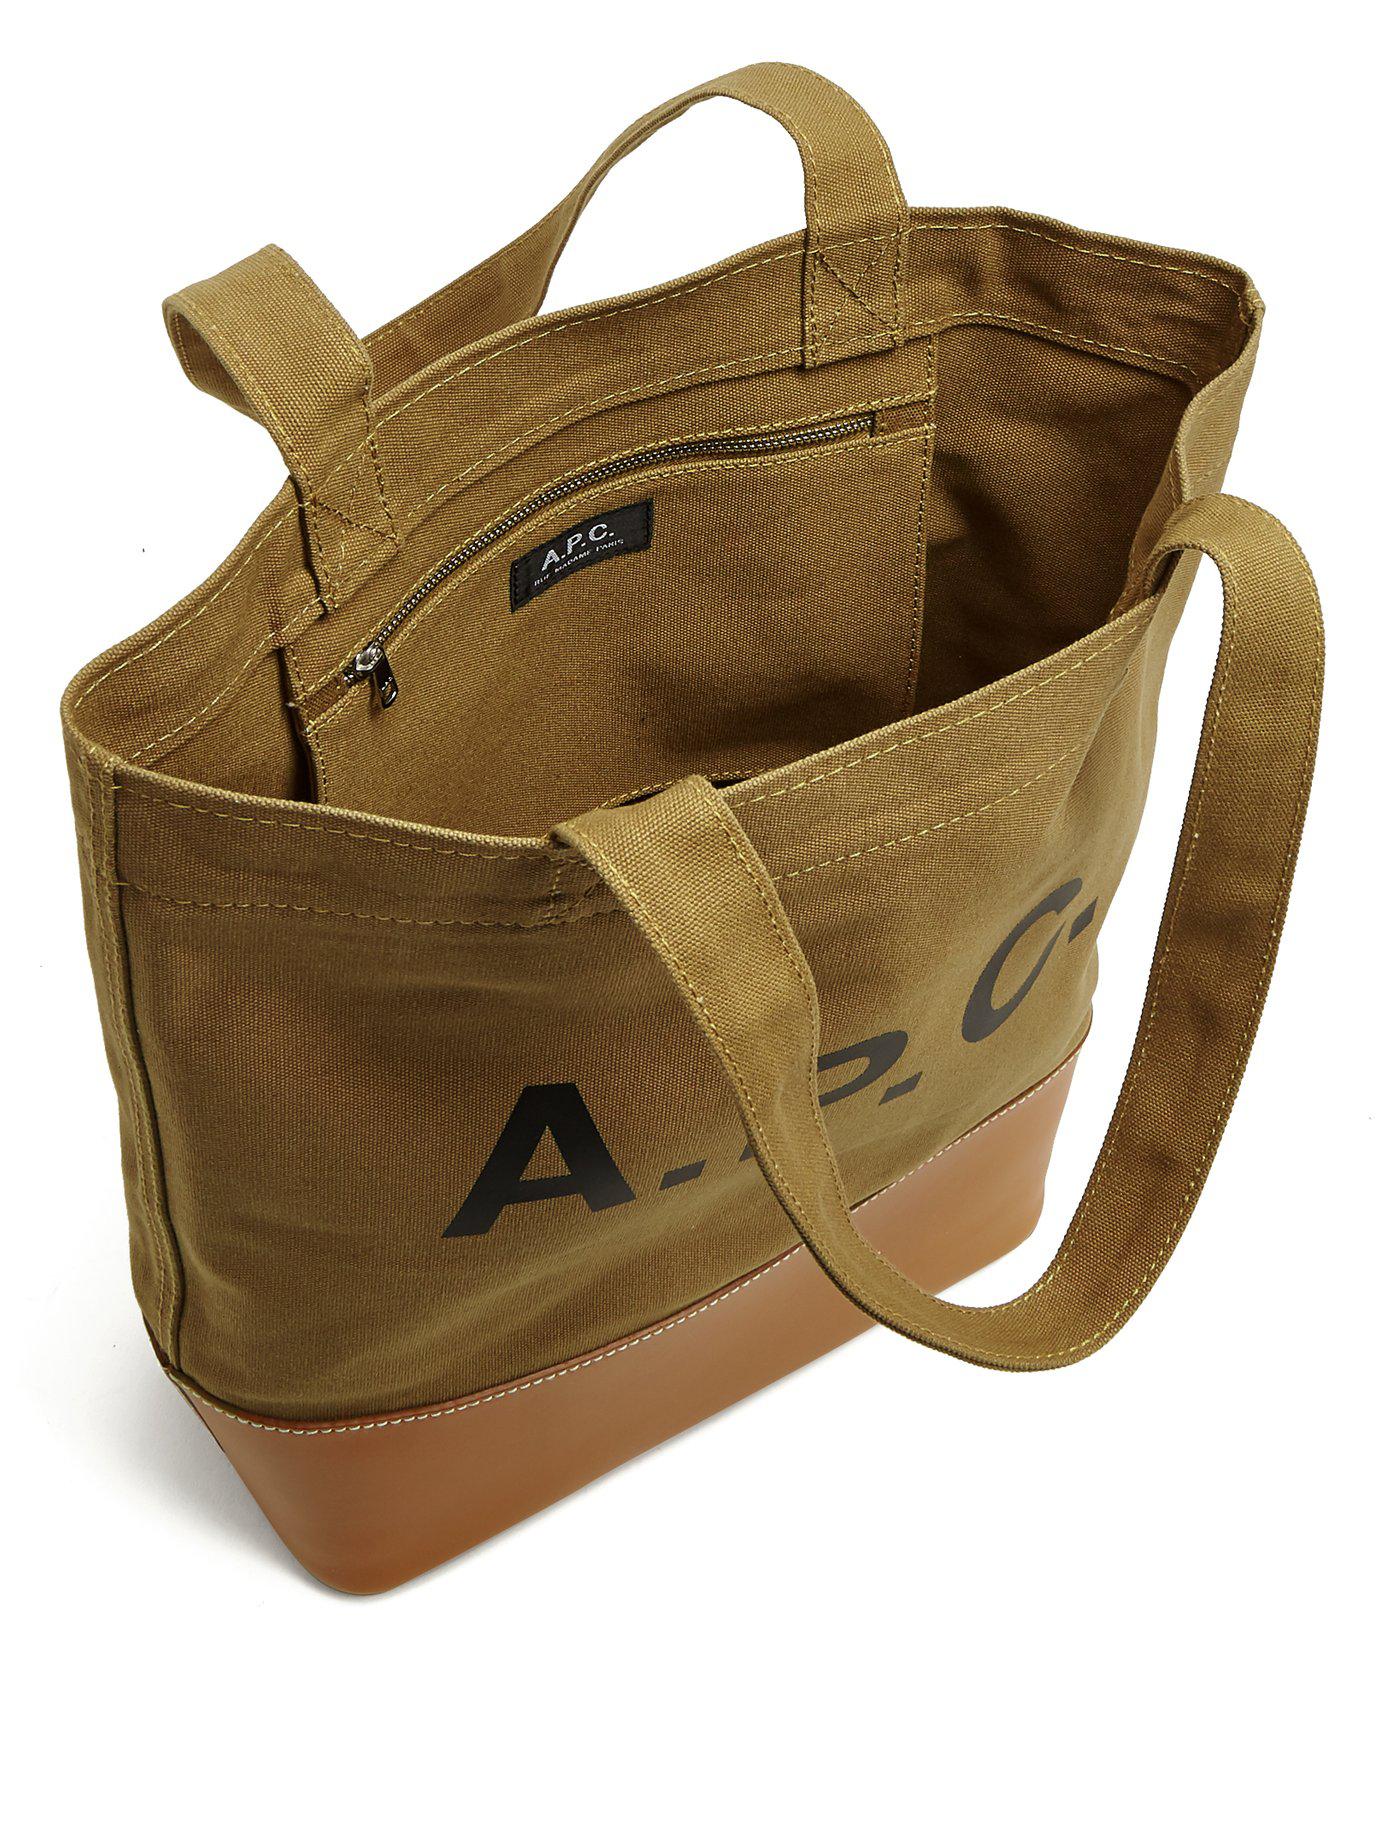 A.P.C. Contrast Panel Logo Print Canvas Tote Bag for Men - Lyst